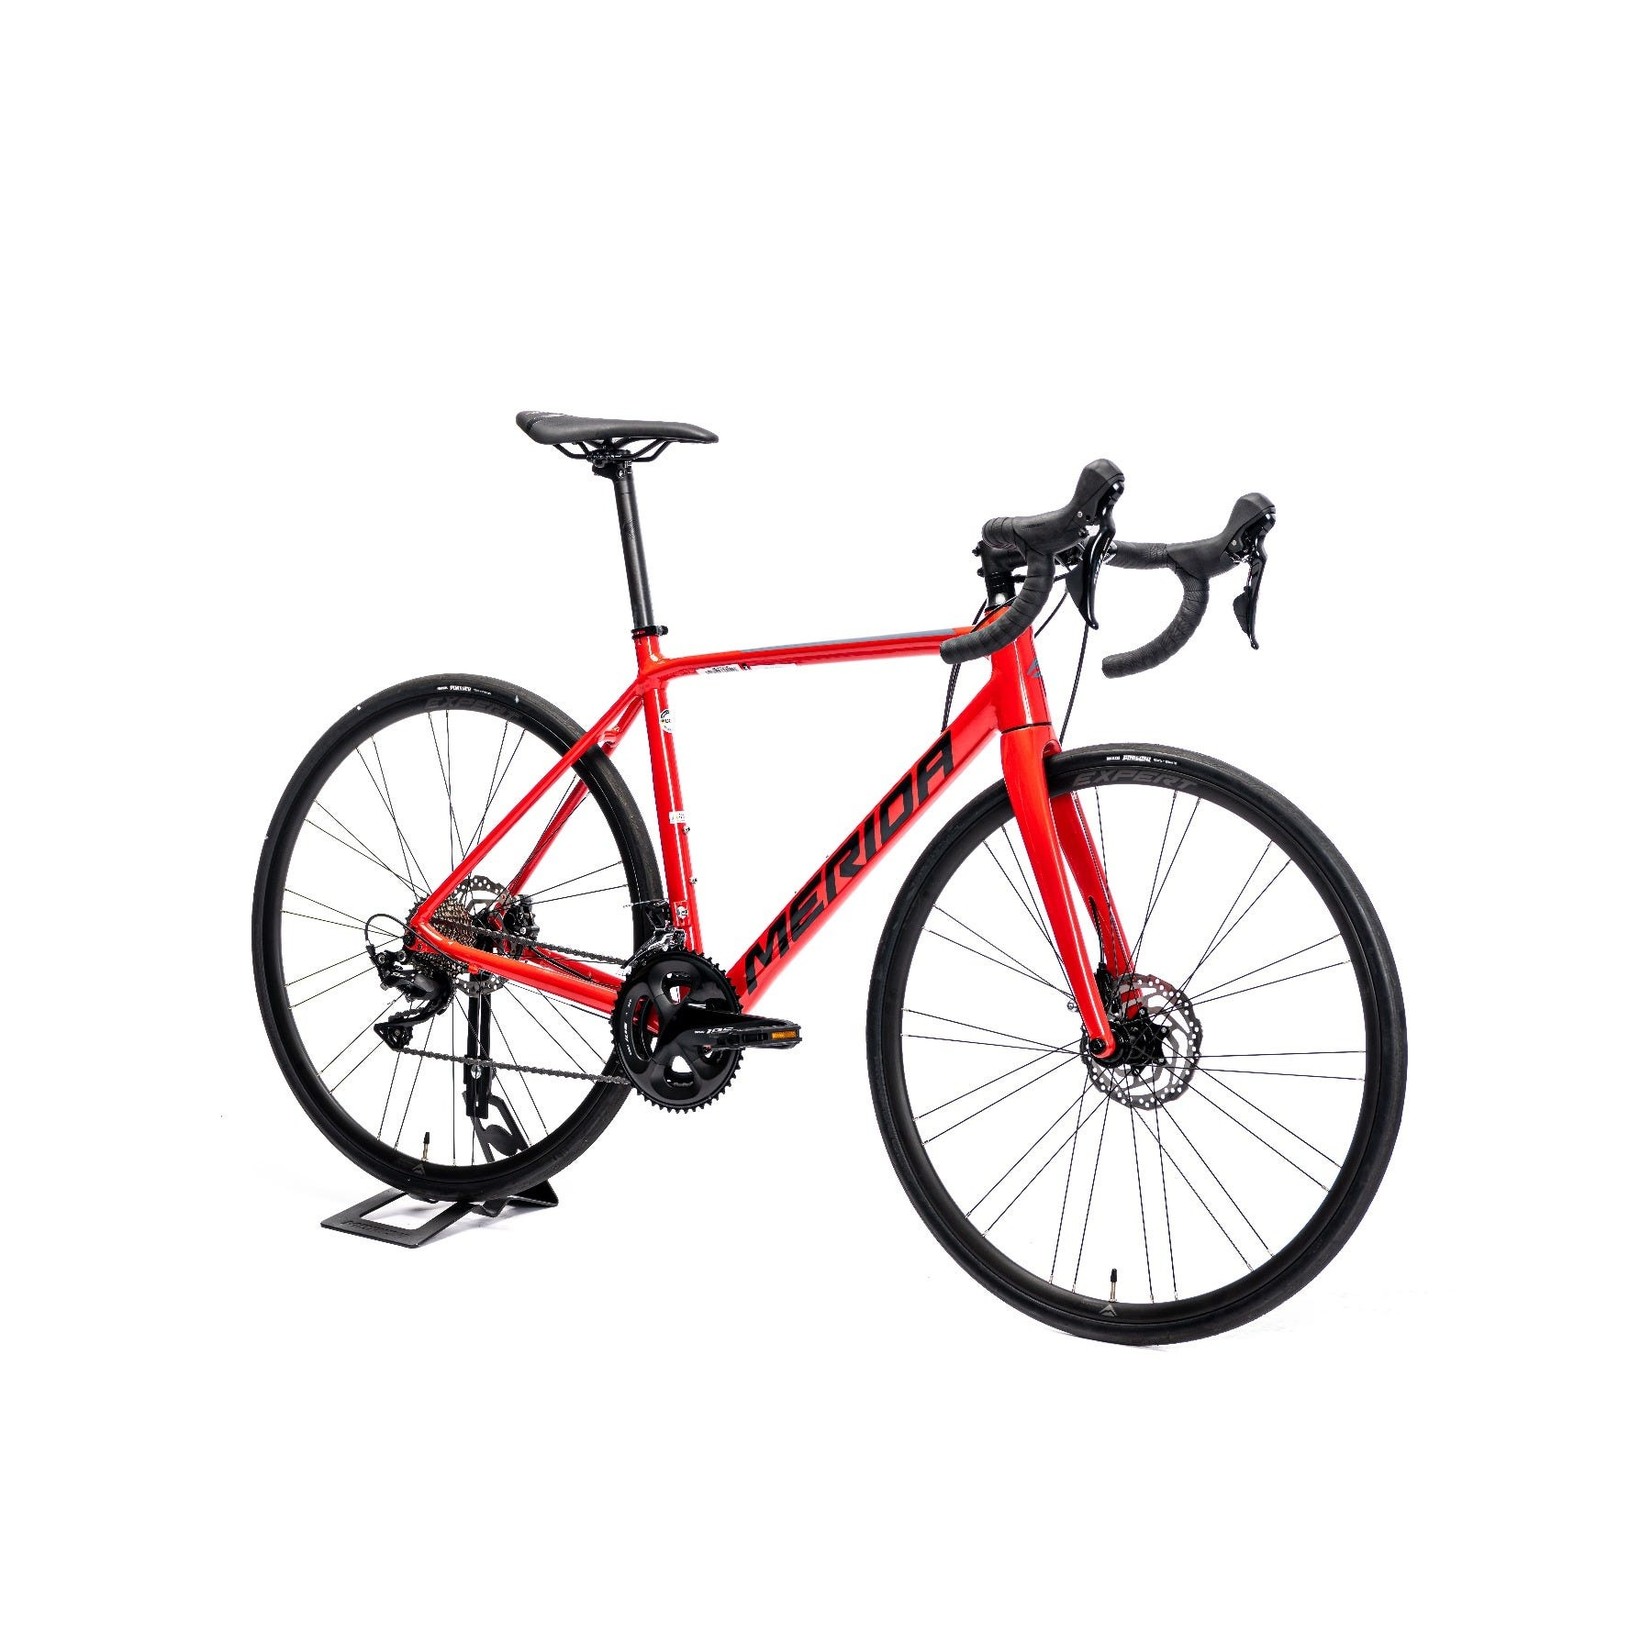 Merida Merida 2021 Scultura 400 Road Bike - Golden Red (Grey) - Medium/Large(54)